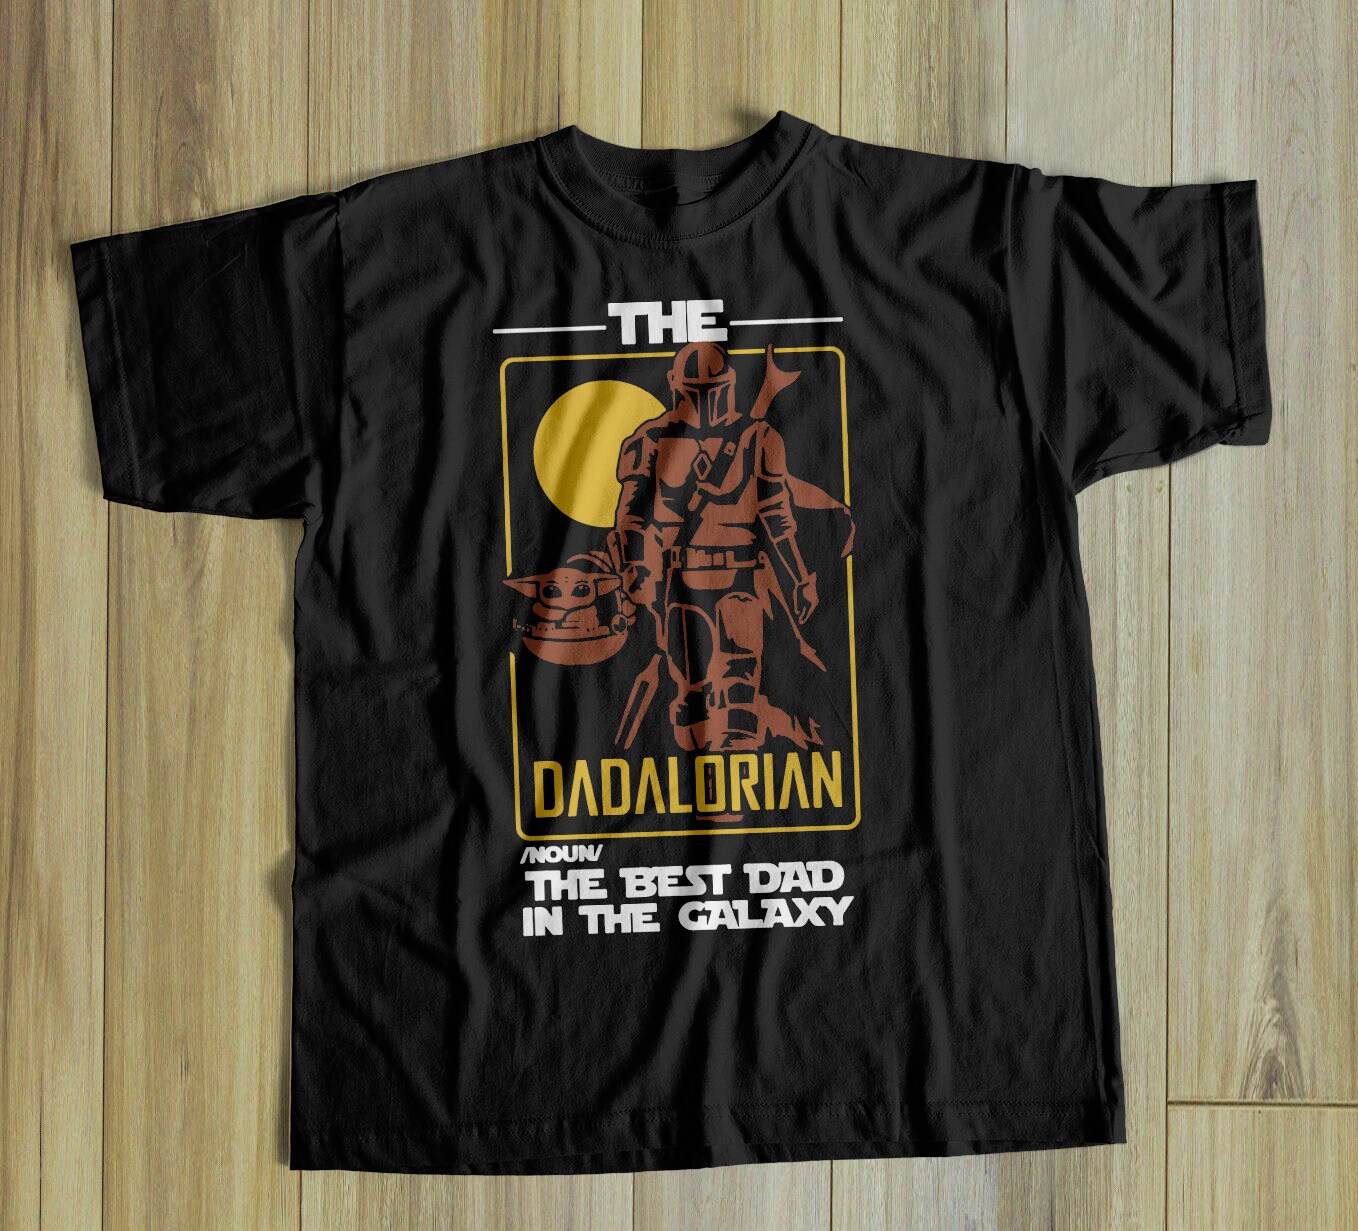 The-dadalorian-shirt-mandalorian-shirt-fathers-day-gift-gift-for-dad-fathers-day-shirts-dad-superhero-shirt-star-wars-shirtdaddy-ppxfg